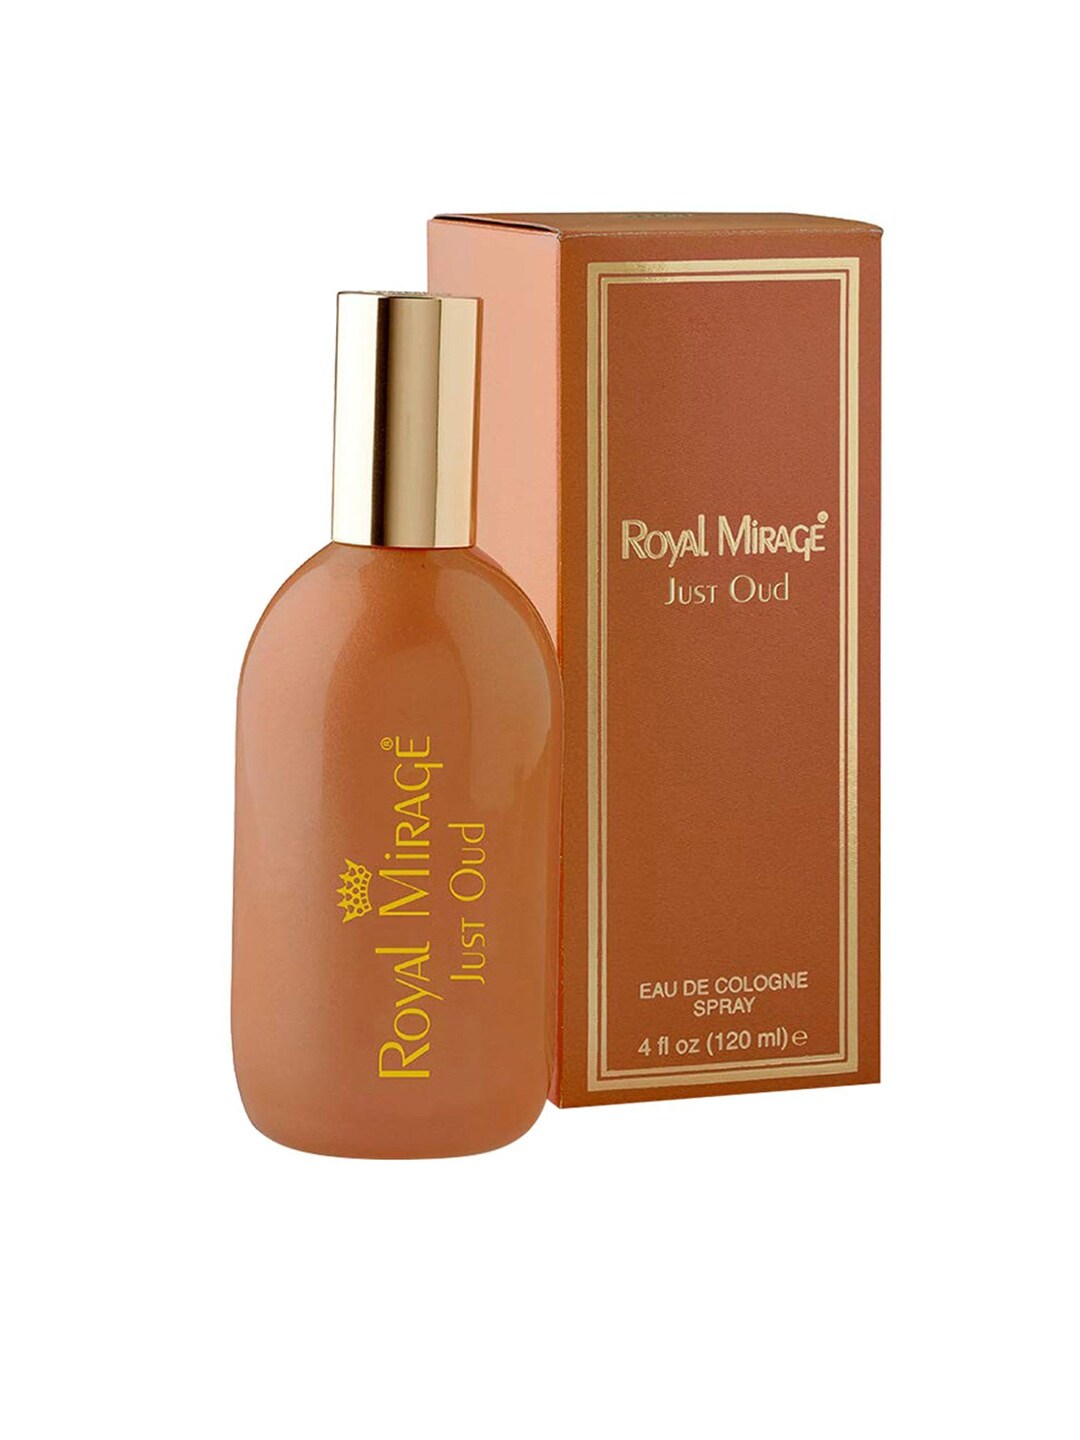 Royal Mirage Men Just Oud Eau De Cologne Perfume 120ml Price in India